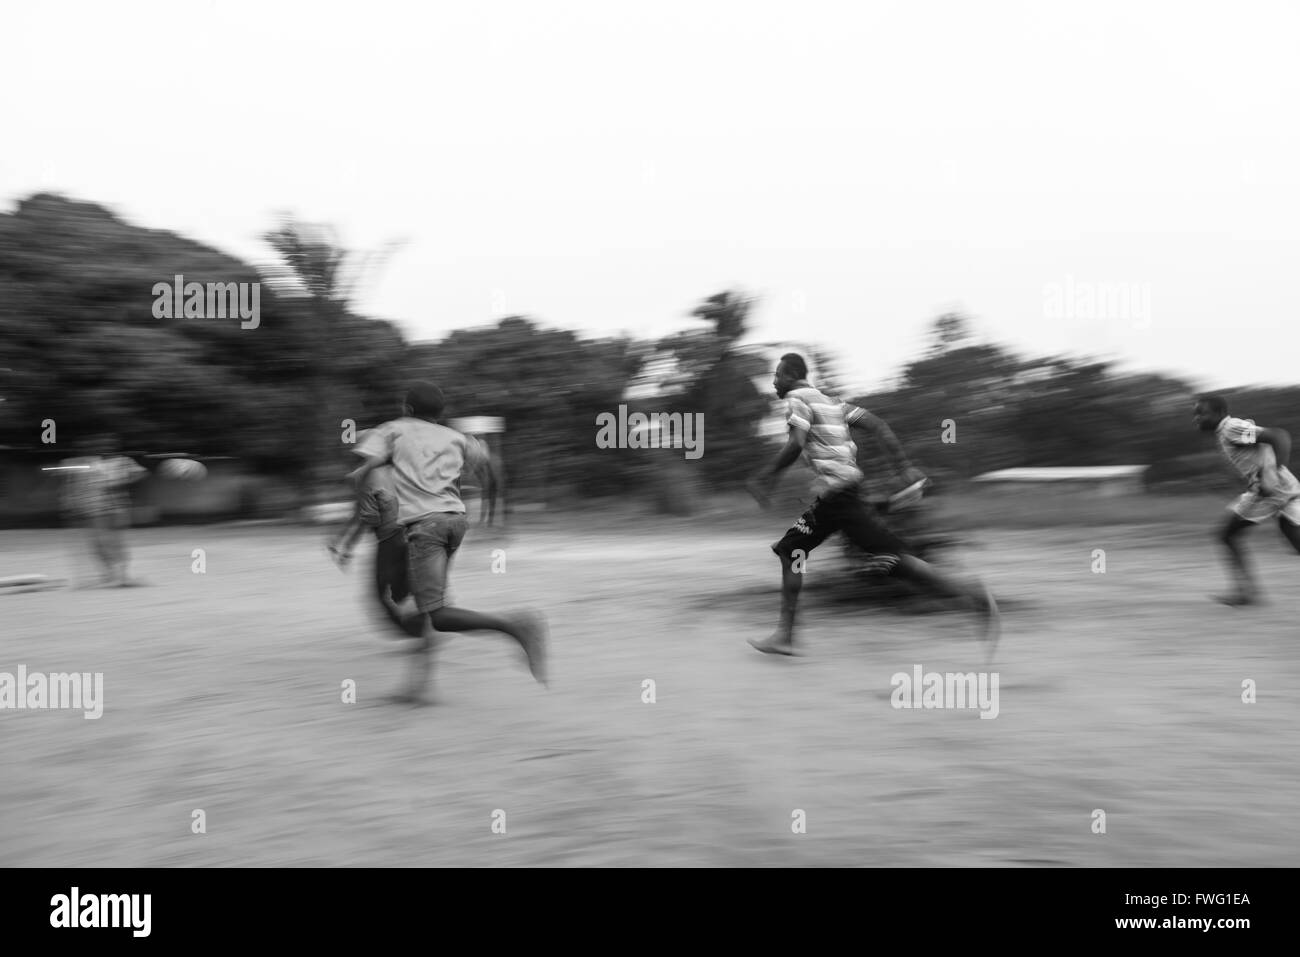 Street soccer, Democratic Republic of Congo Stock Photo